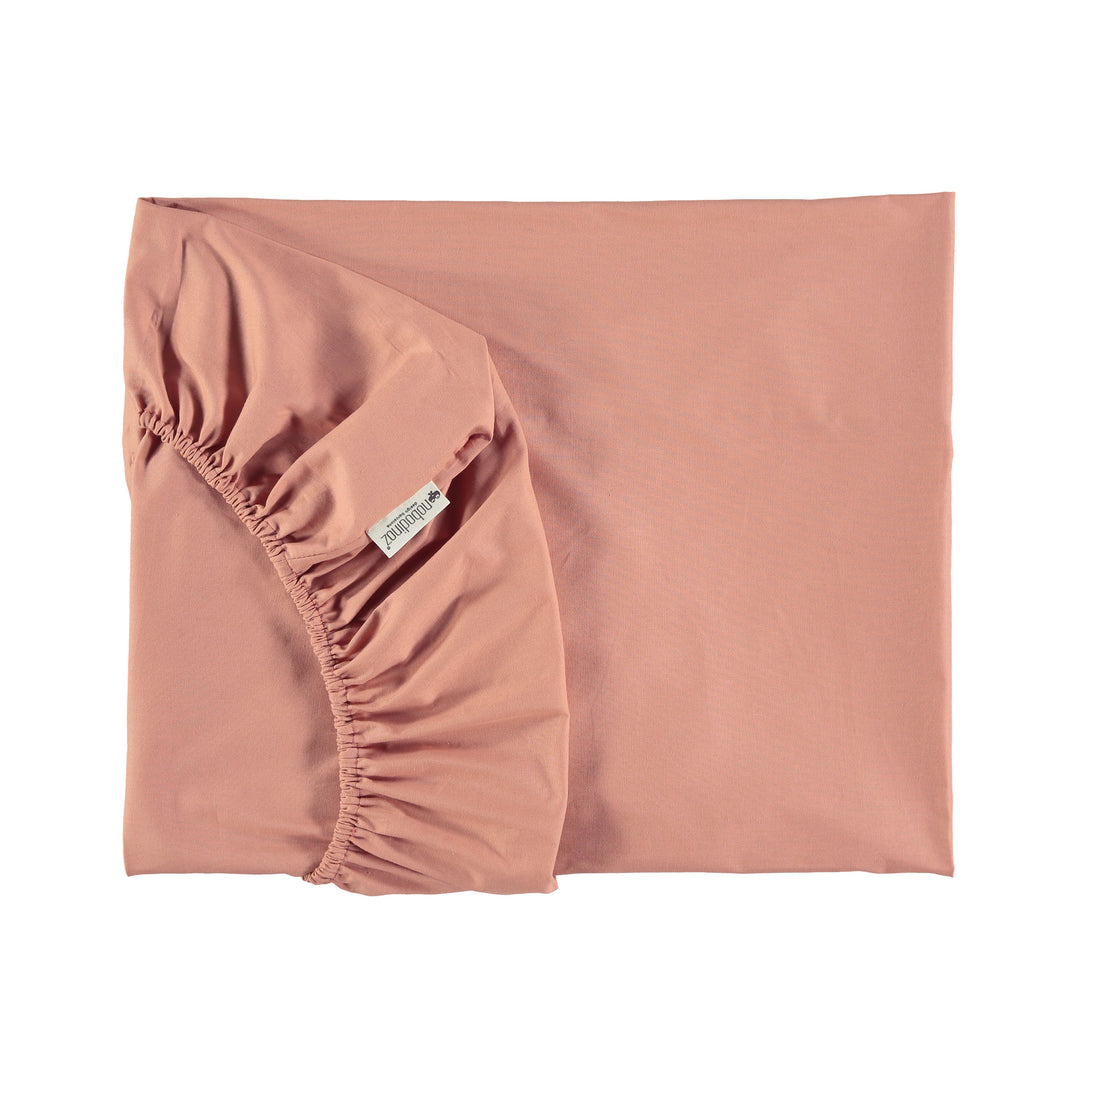 nobodinoz-fitted-sheet-single-dolce-vita-pink- (1)